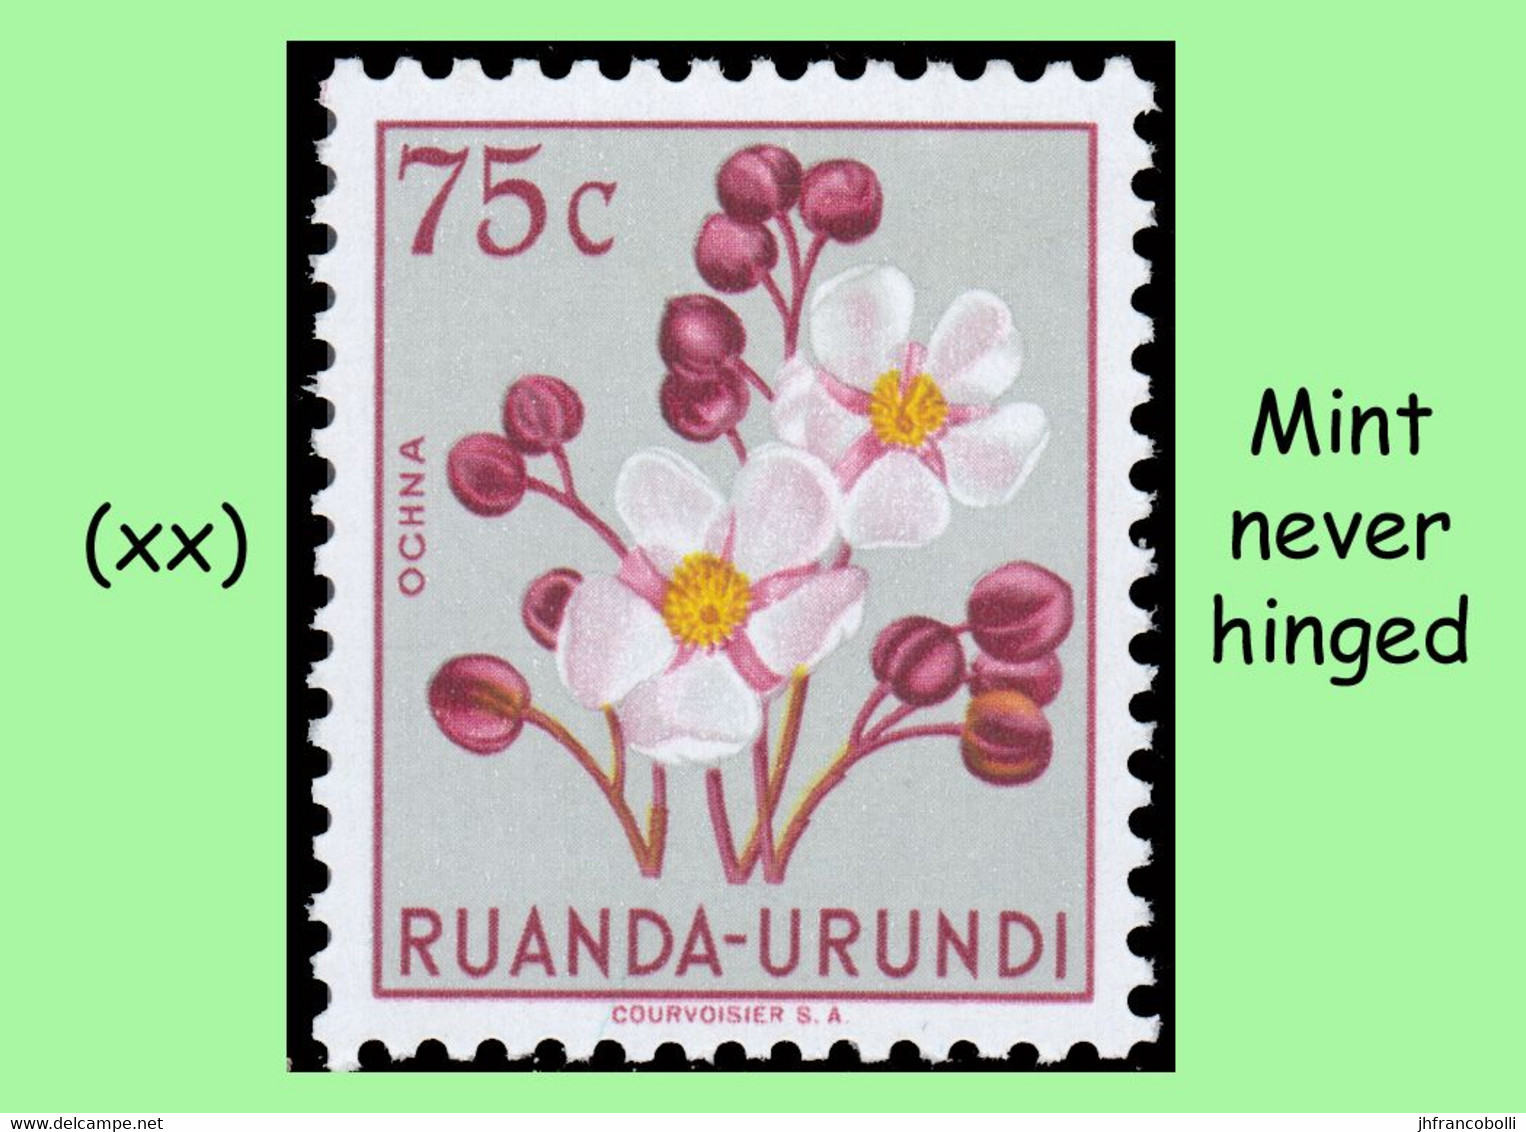 1953 ** RUANDA-URUNDI RU 177/195 MNH TROPICAL FLOWERS SET  ( x 19 stamps )